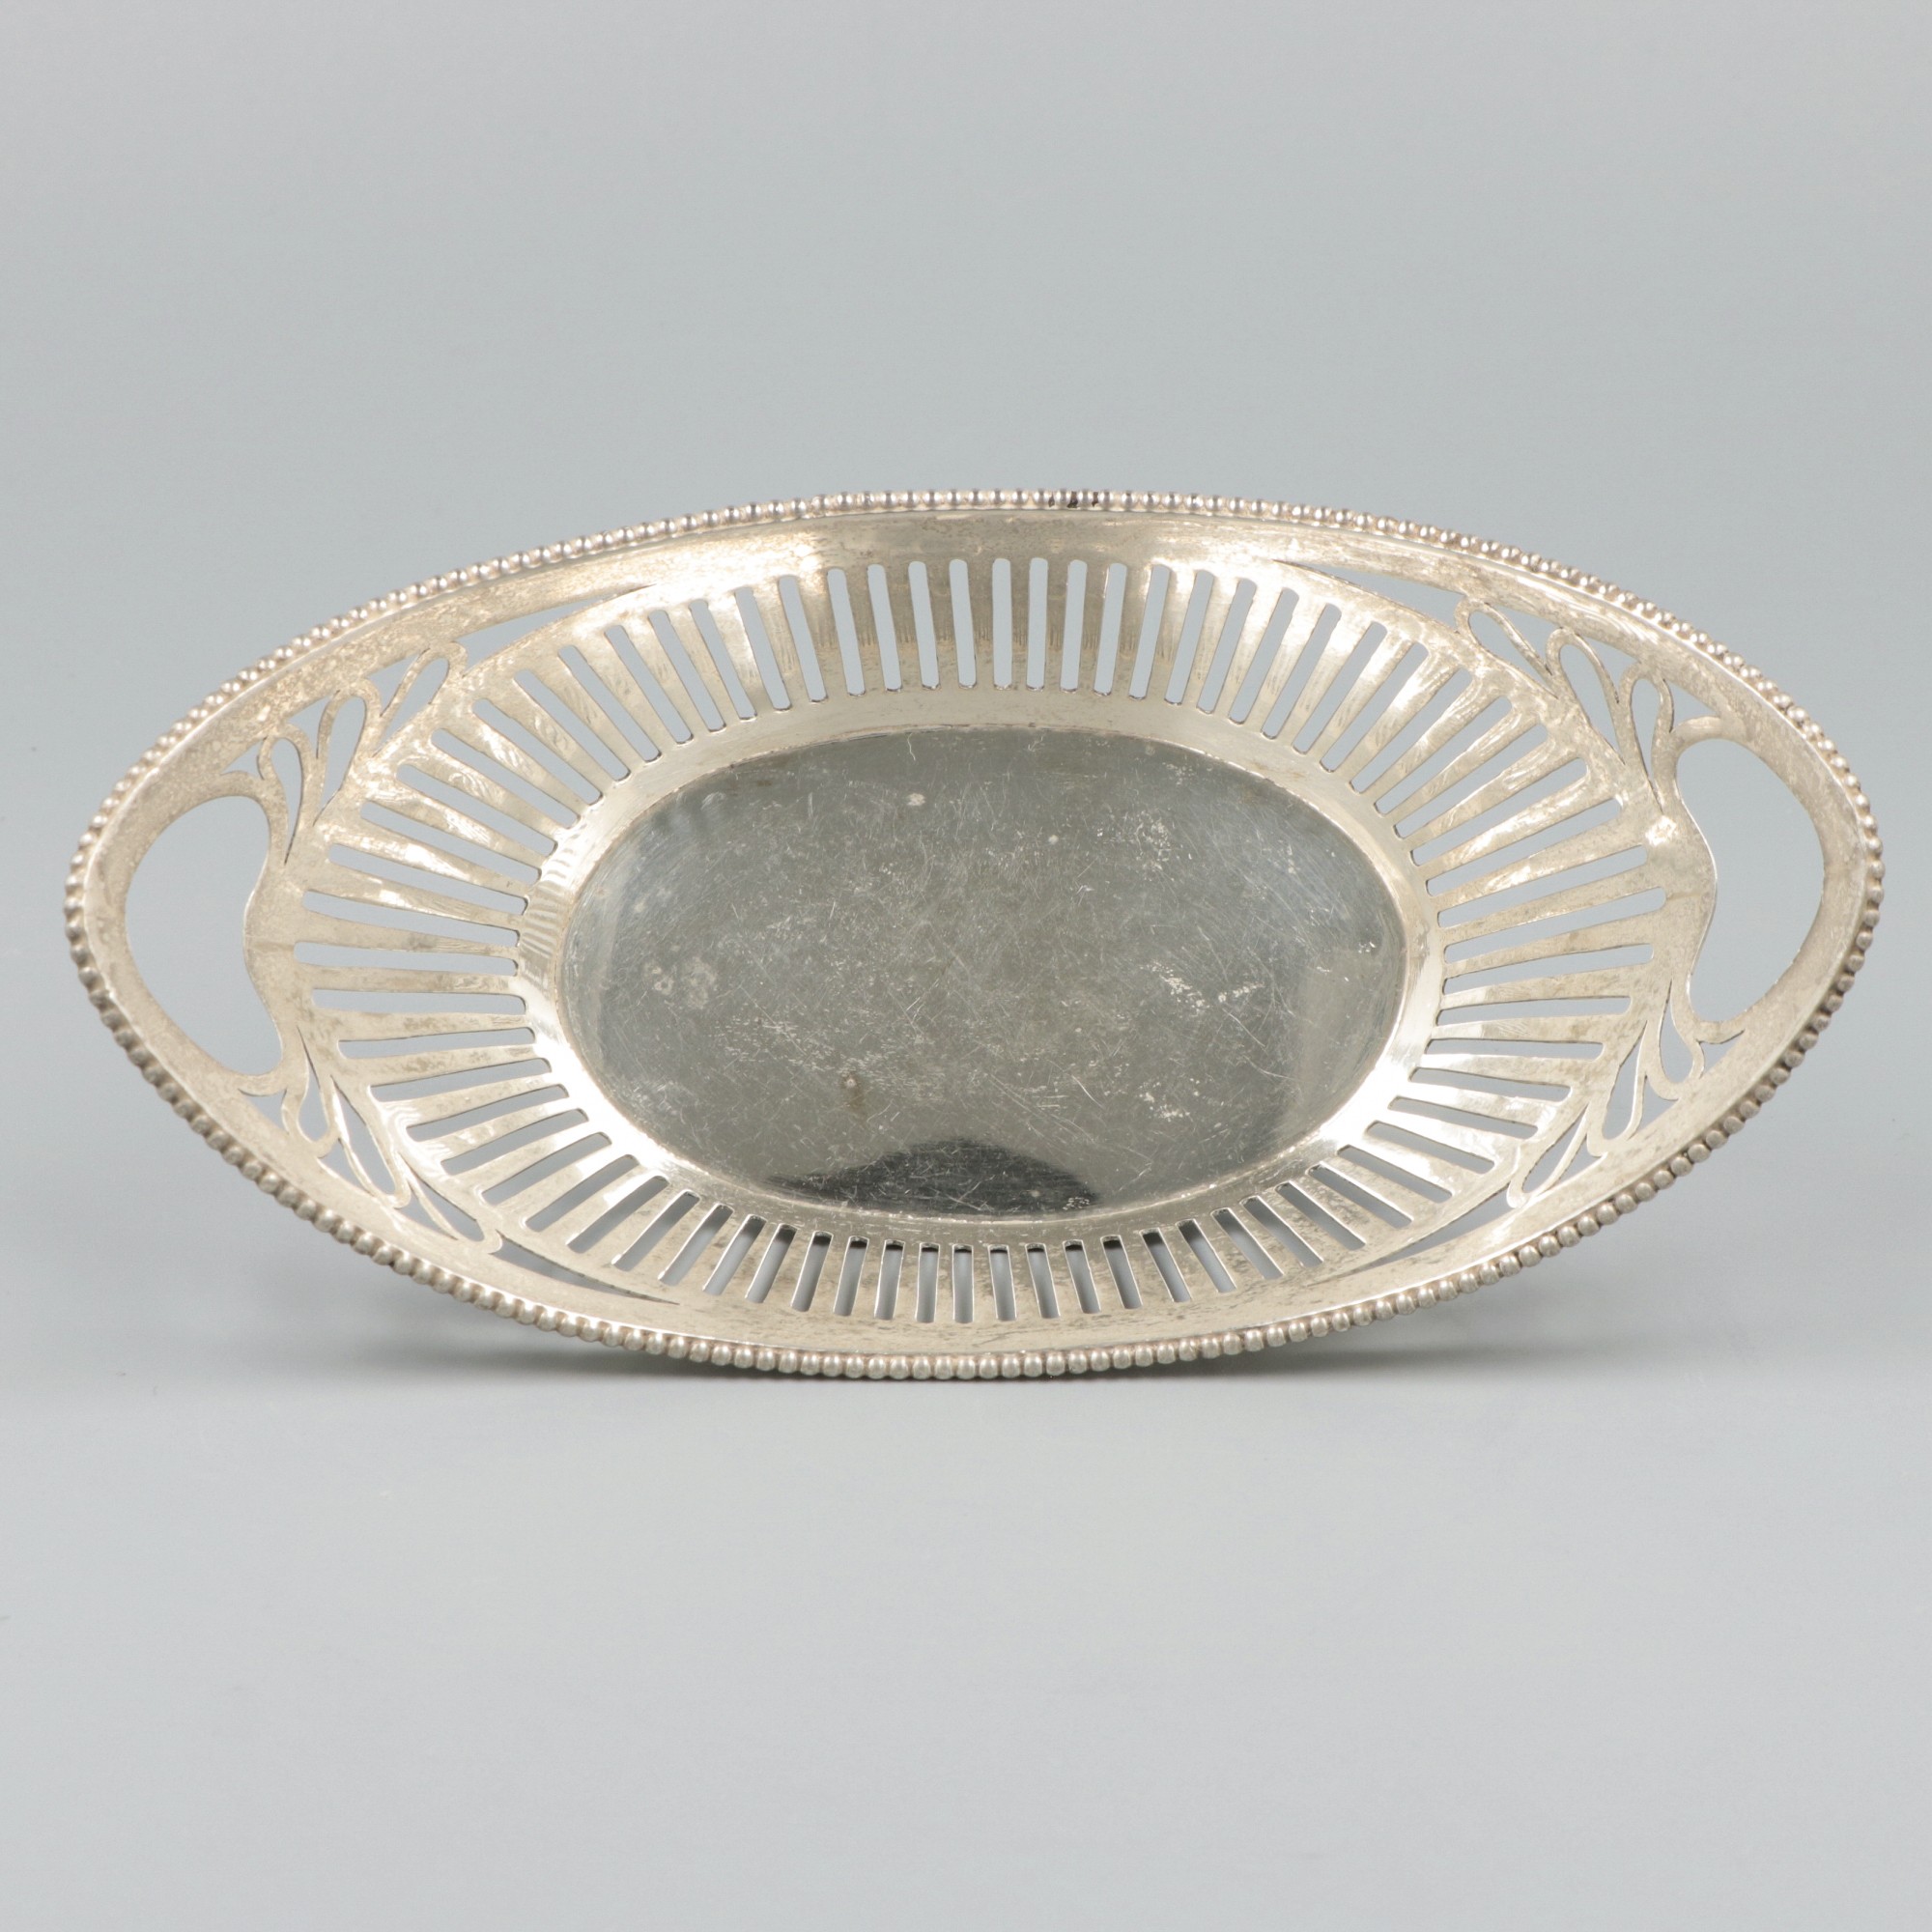 Sweetmeat basket silver. - Image 2 of 5